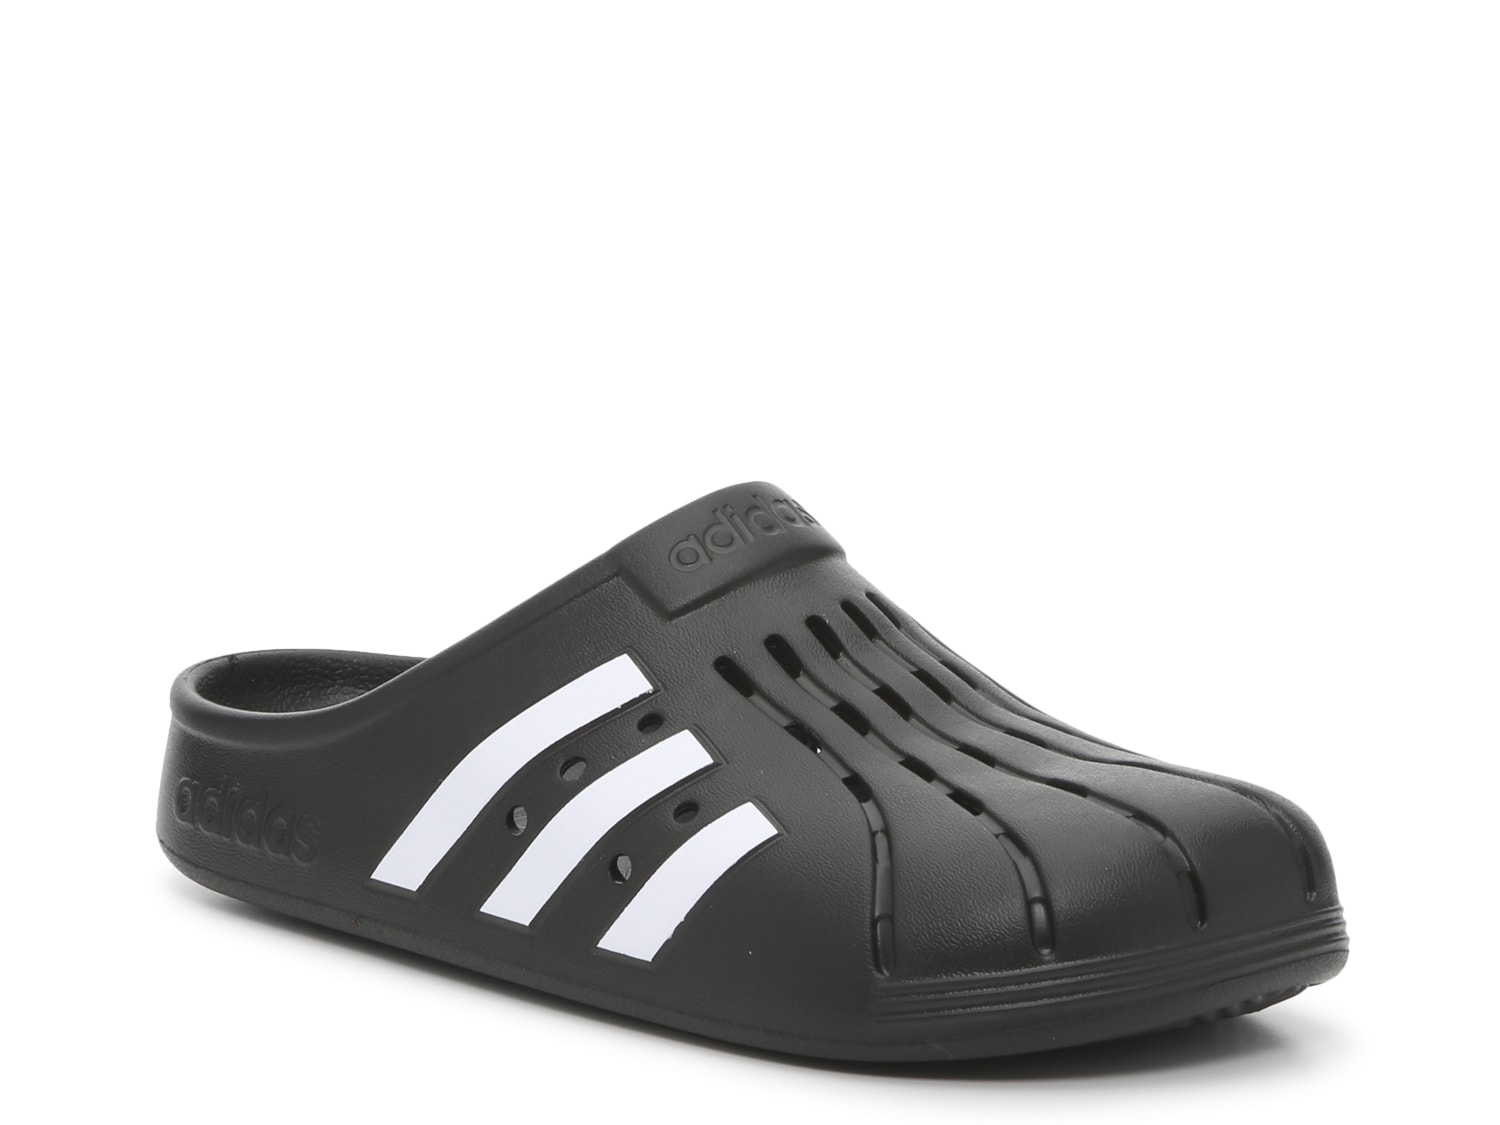 adidas shell toe crocs